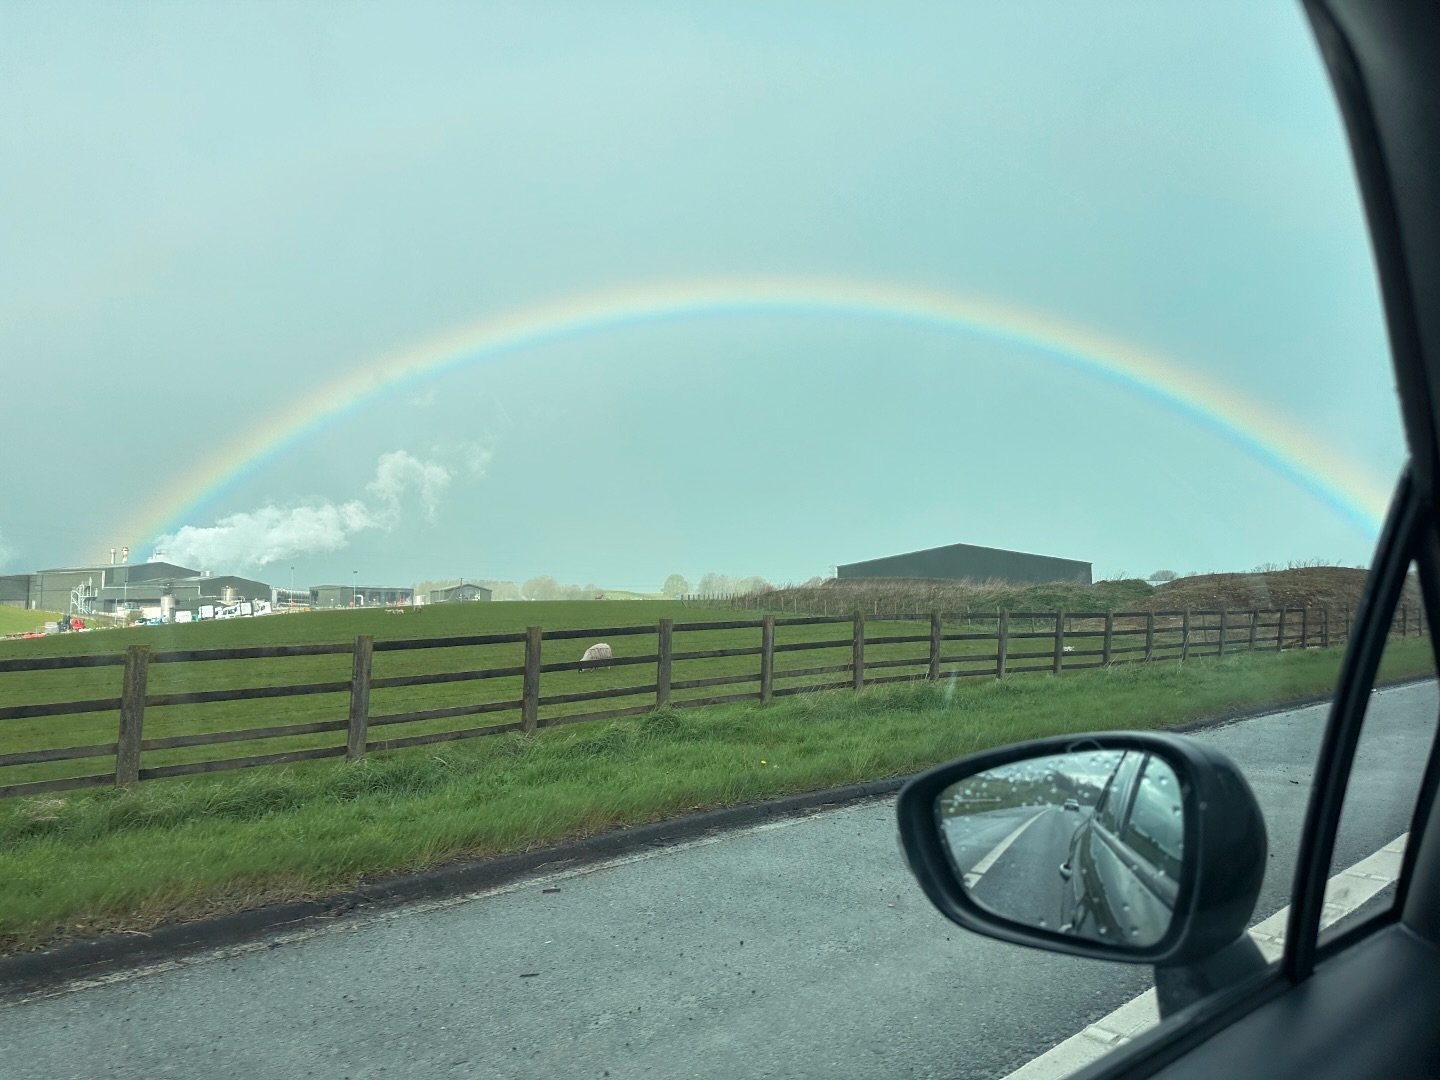 111 KM to Scotland! An auspicious day 🧚

#rainbowmagic
#angelnumbers